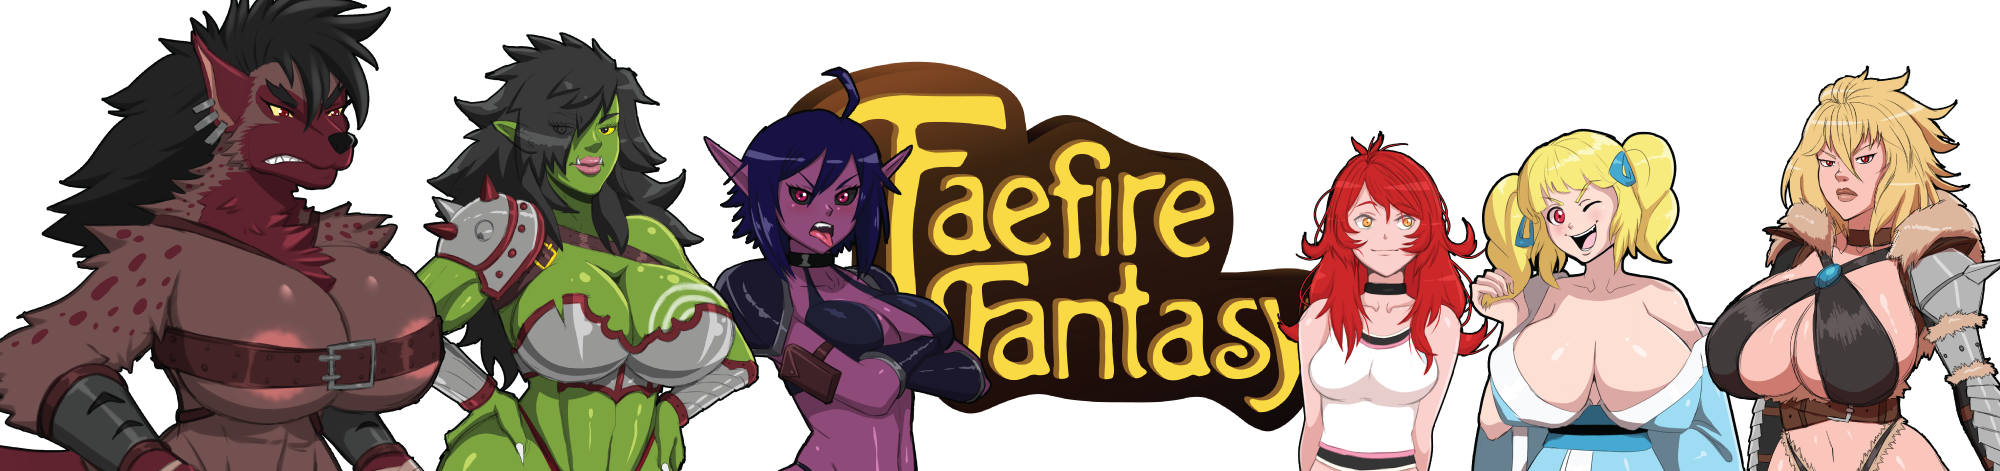 Fire Fantasy Porn - Faefire Fantasy v0.1 - free game download, reviews, mega - xGames